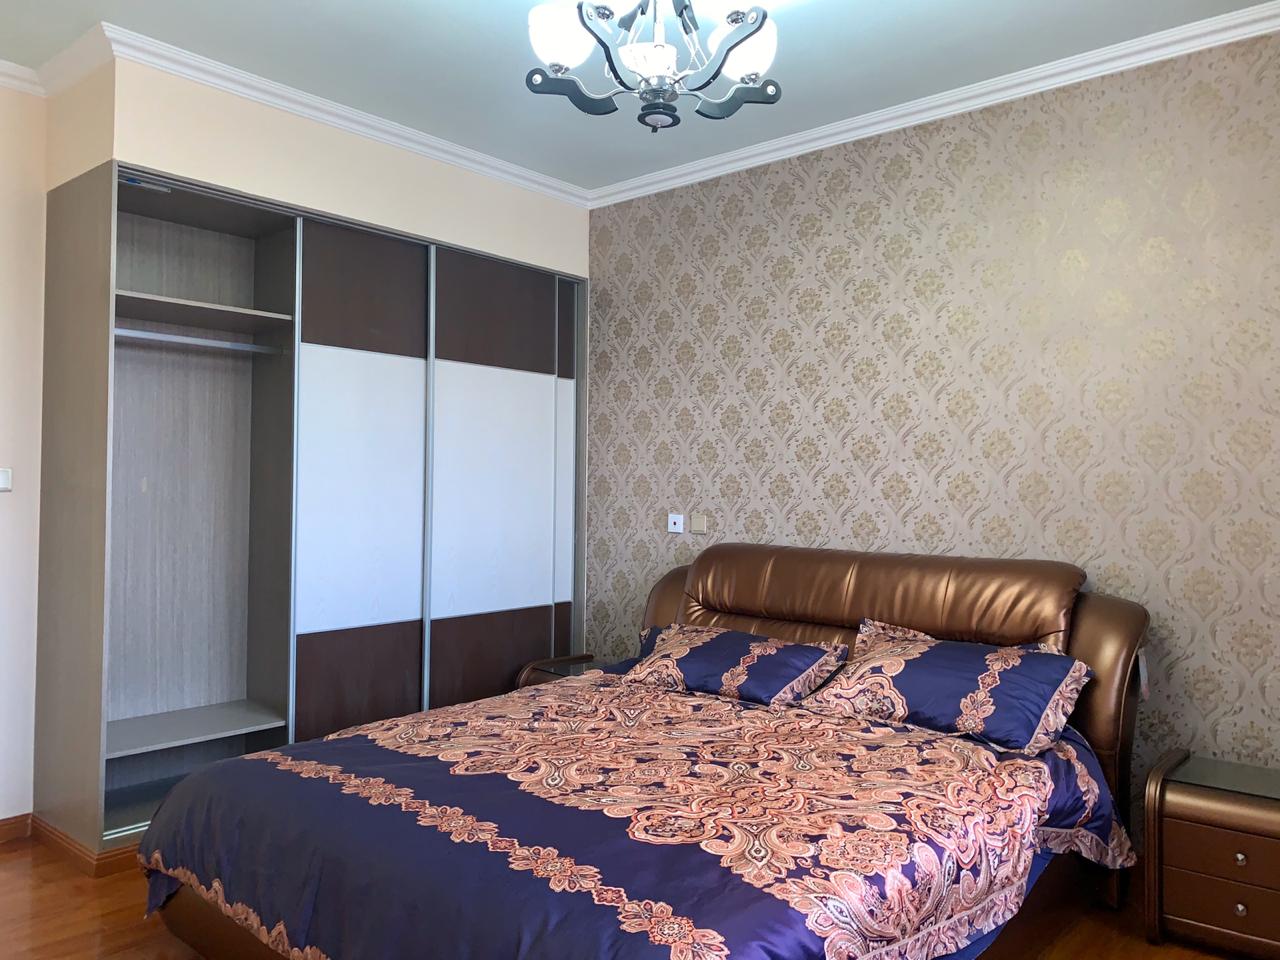 3 Bedroom apartments 3 Bedroom apartments located in Kilimani, Denis Pritt Road. 3 bedroom + DSQ (170sqm) 18M Musilli Homes